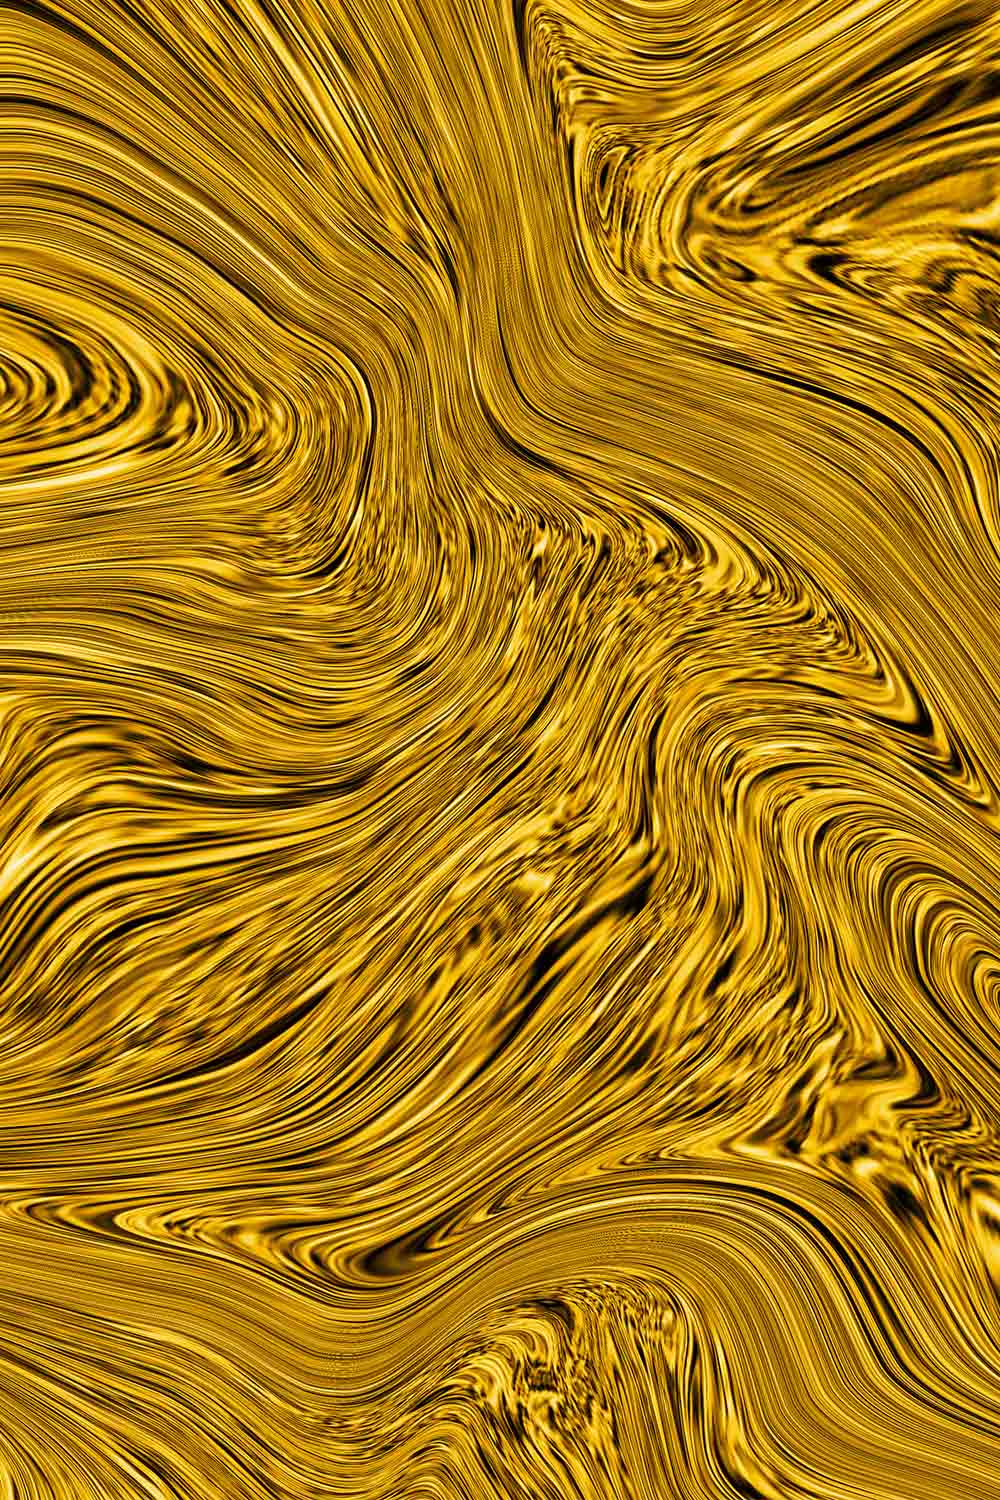 Precious metal flow pinterest preview image.